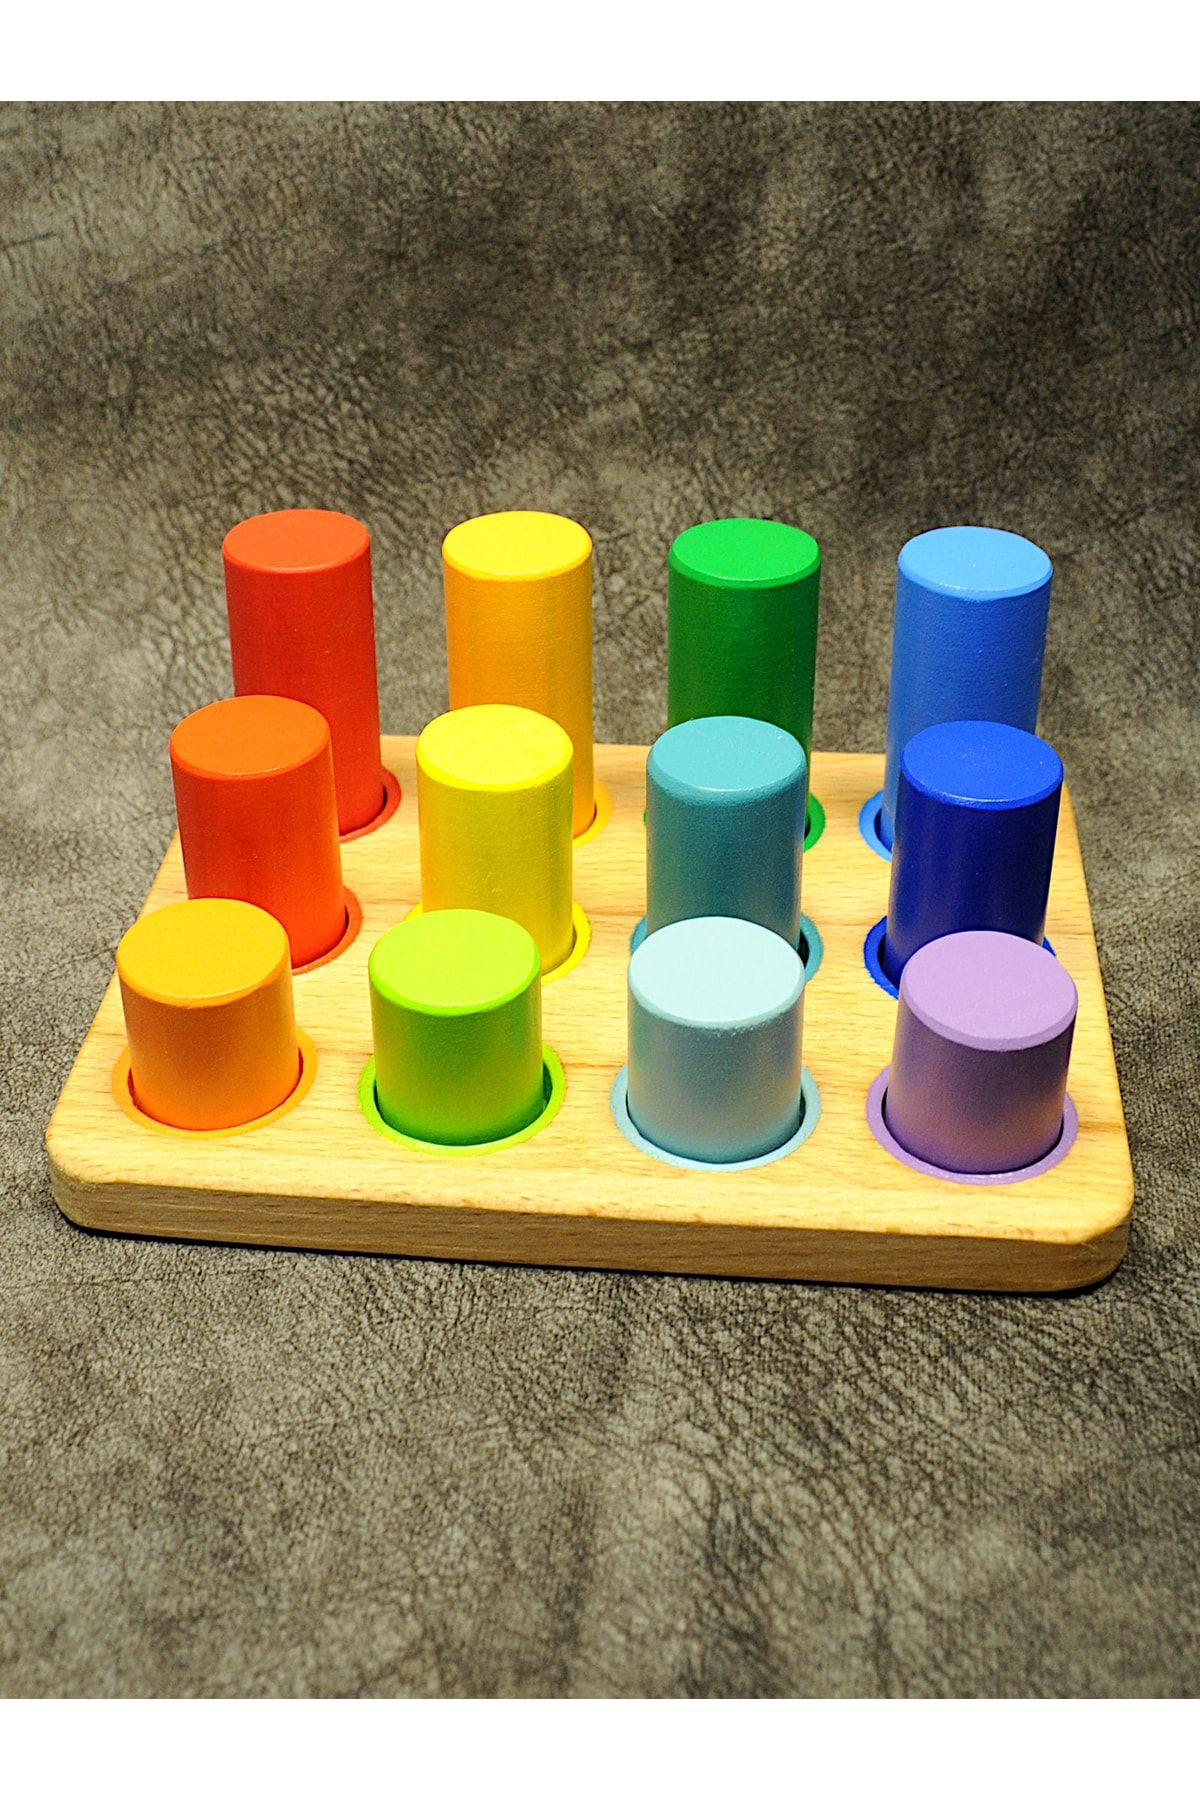 qetum Montessori Tablalı Silindirli Renk Eşleştirme Oyunu